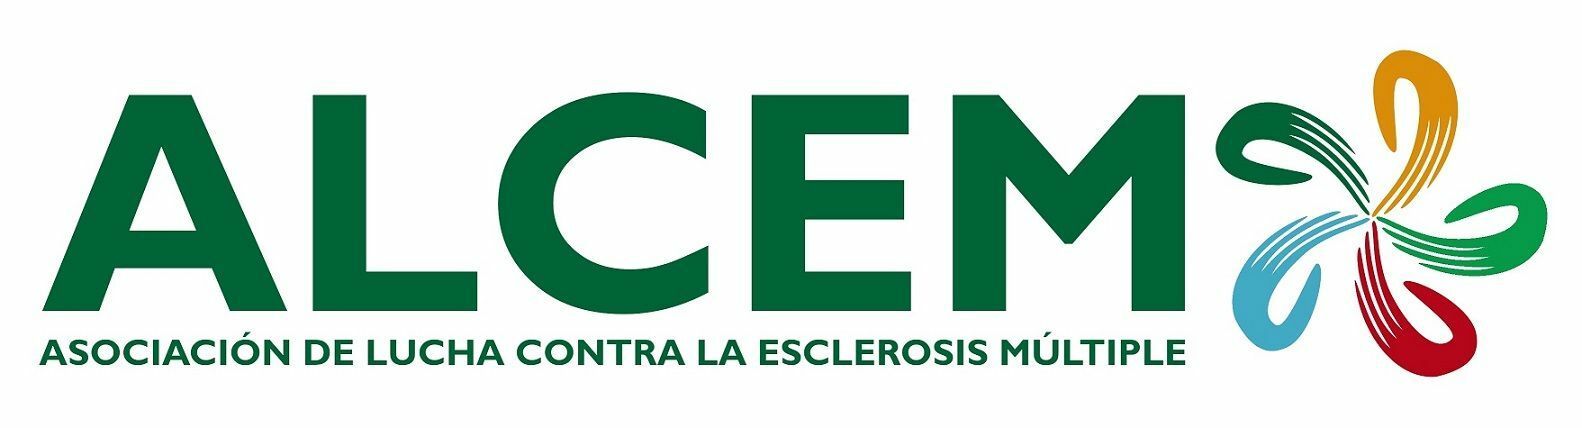 Group logo of ALCEM – ASOCIACION DE LUCHA CONTRA LA ESCLEROSIS MULTIPLE